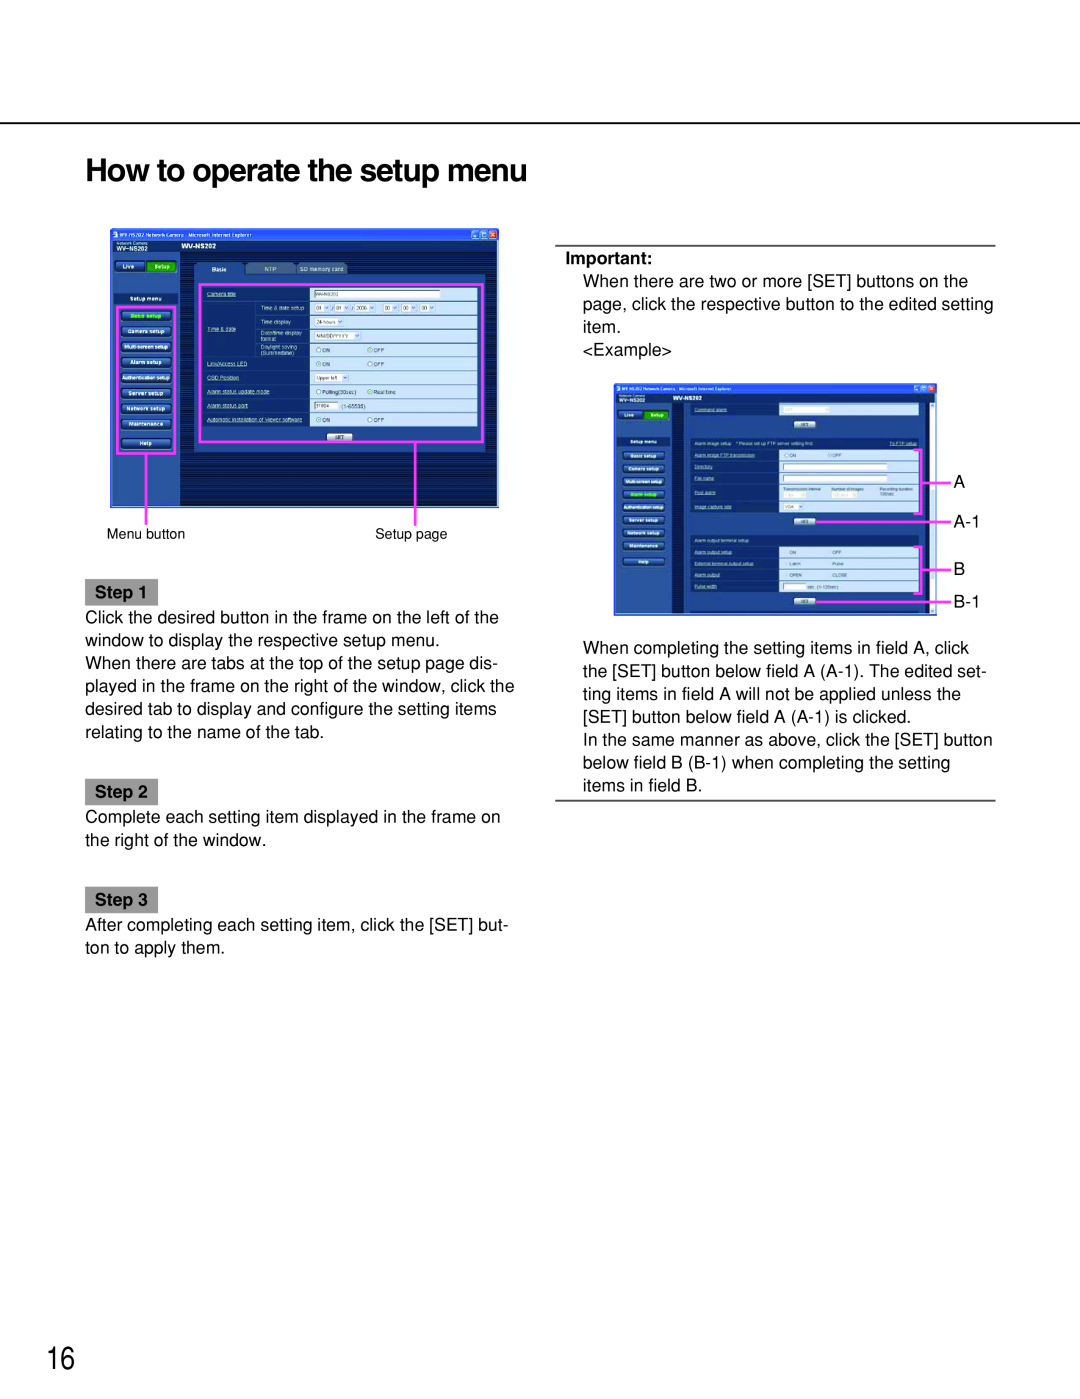 Panasonic WV-NS202 operating instructions How to operate the setup menu, Step 